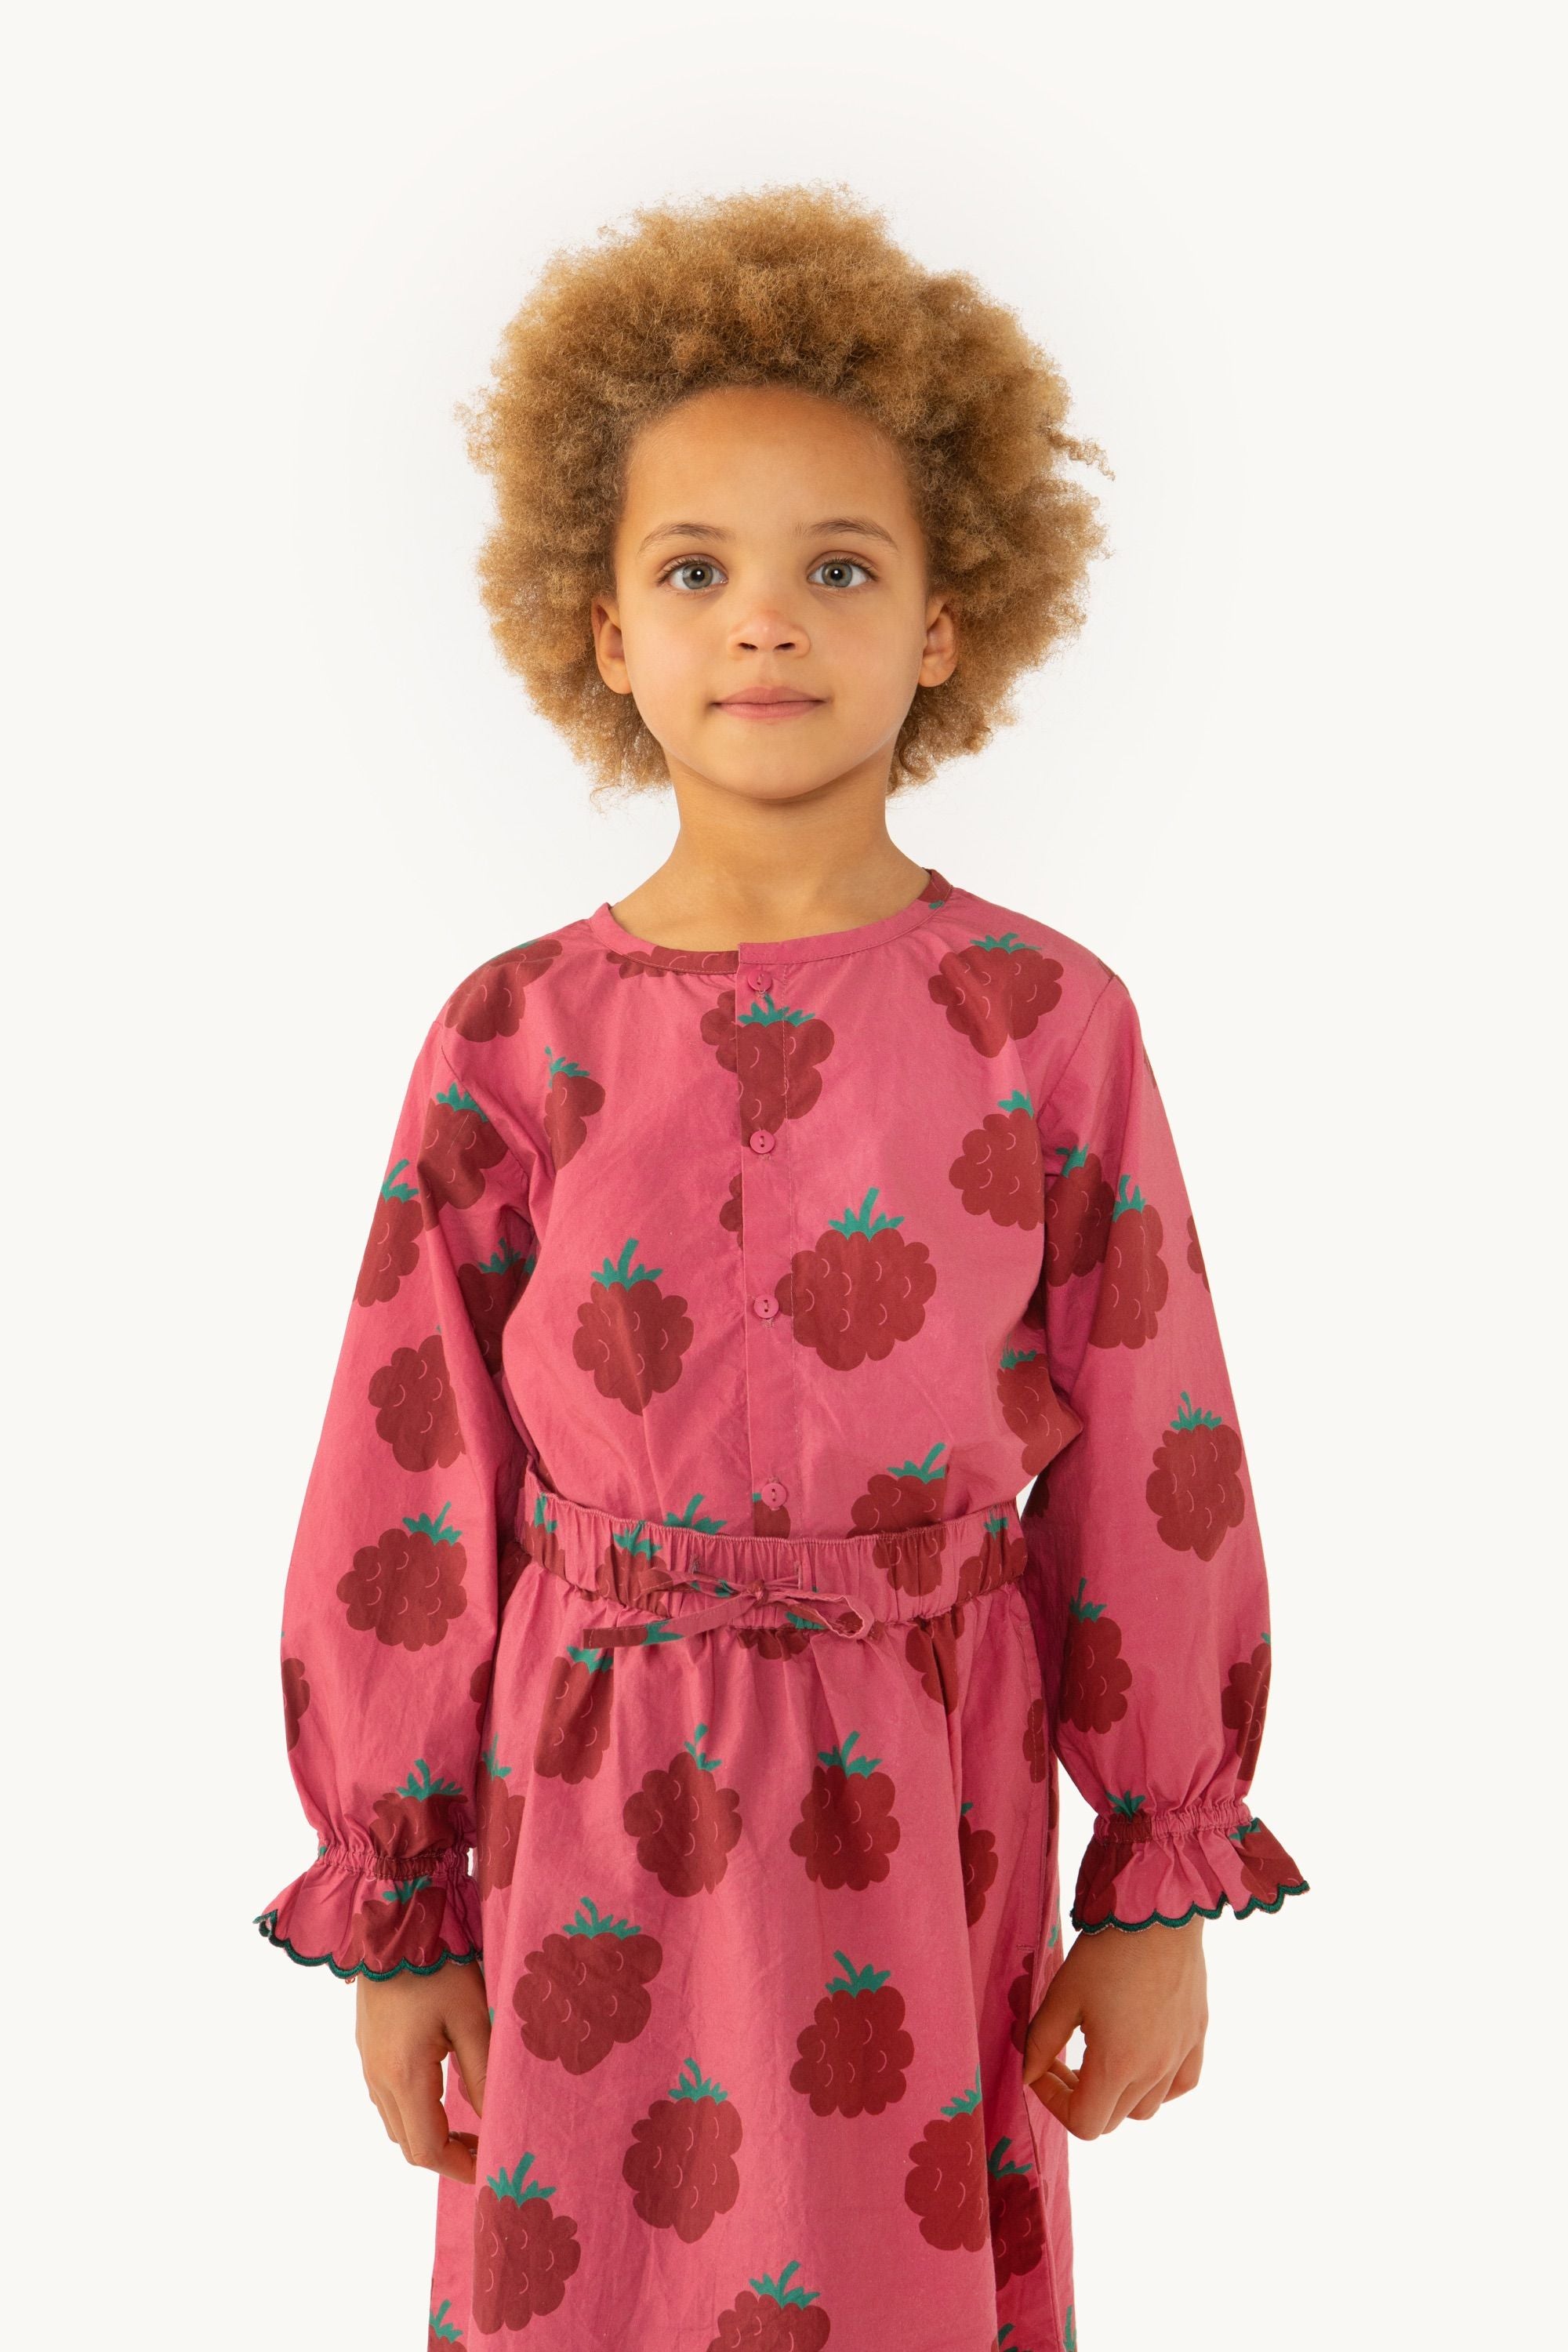 Tiny Cottons - Raspberry Frill Dress